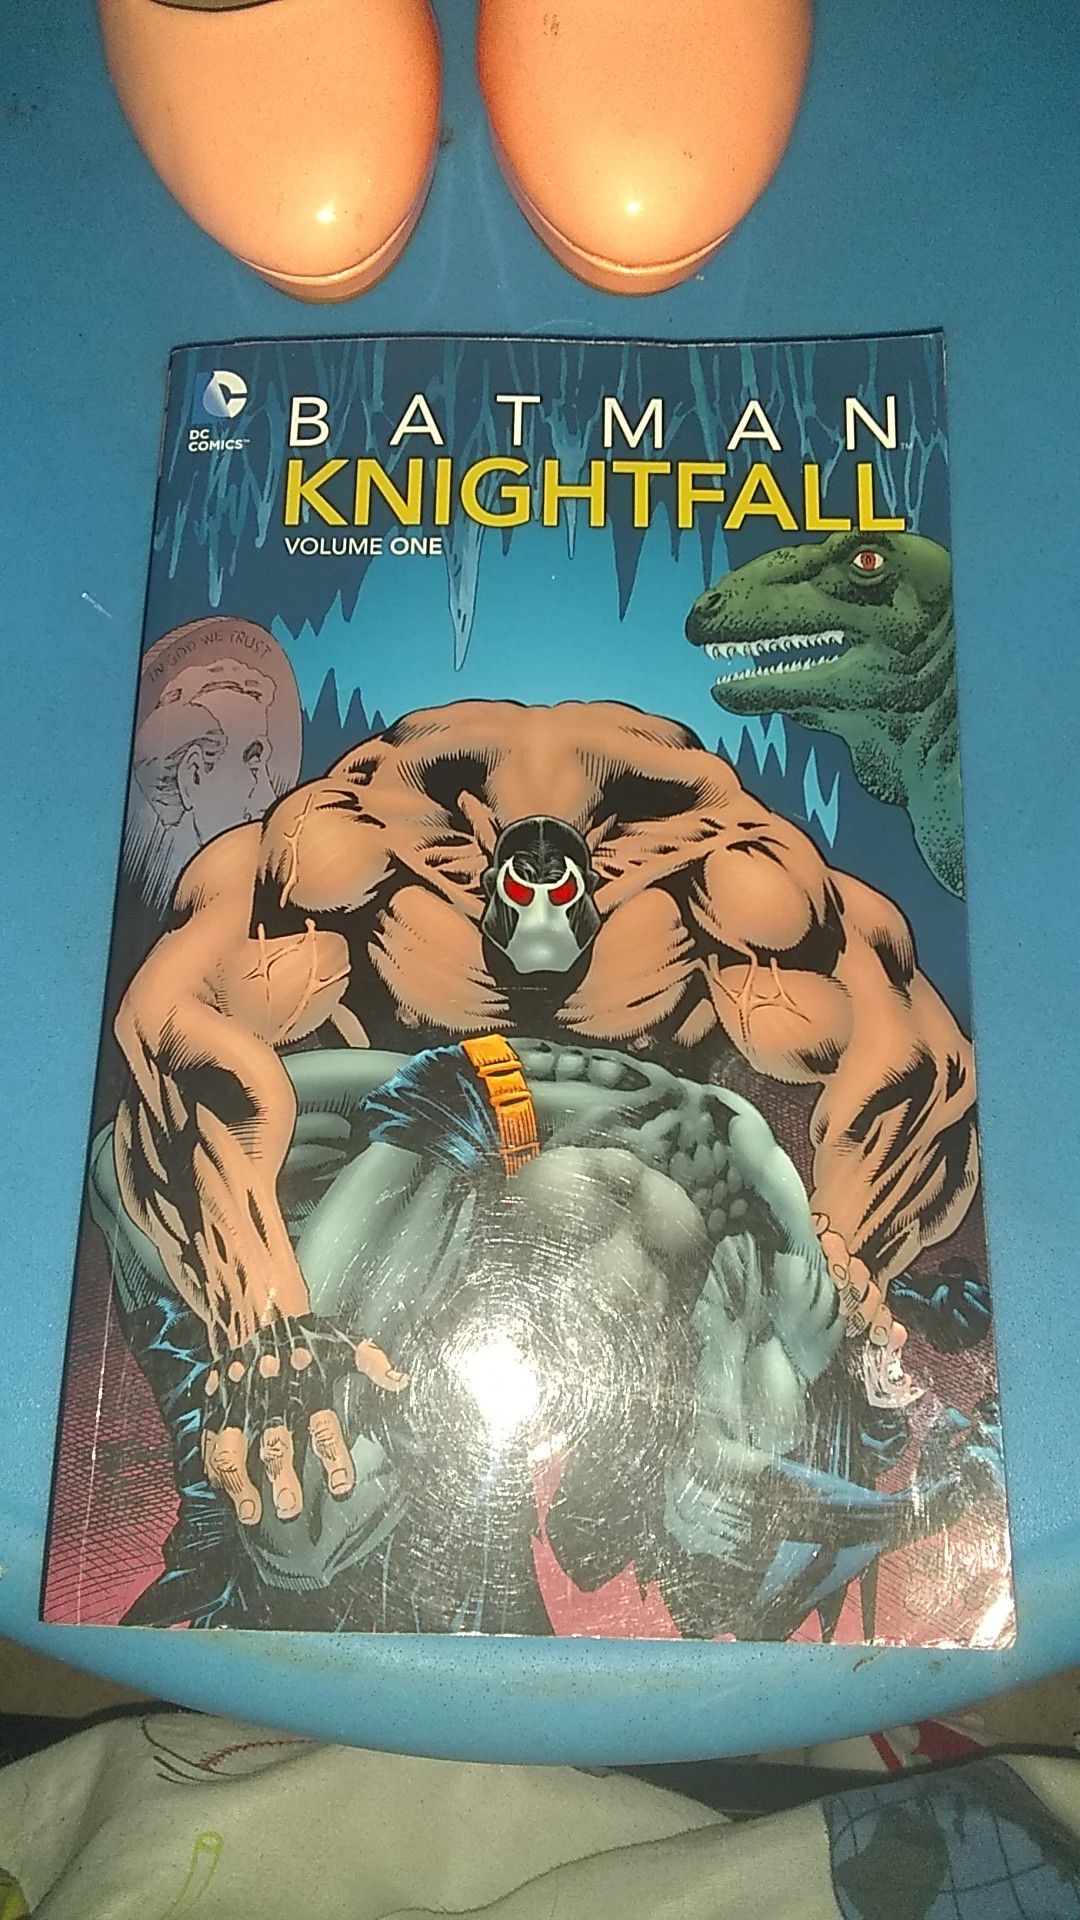 Batman kightfall volumen one Comic book